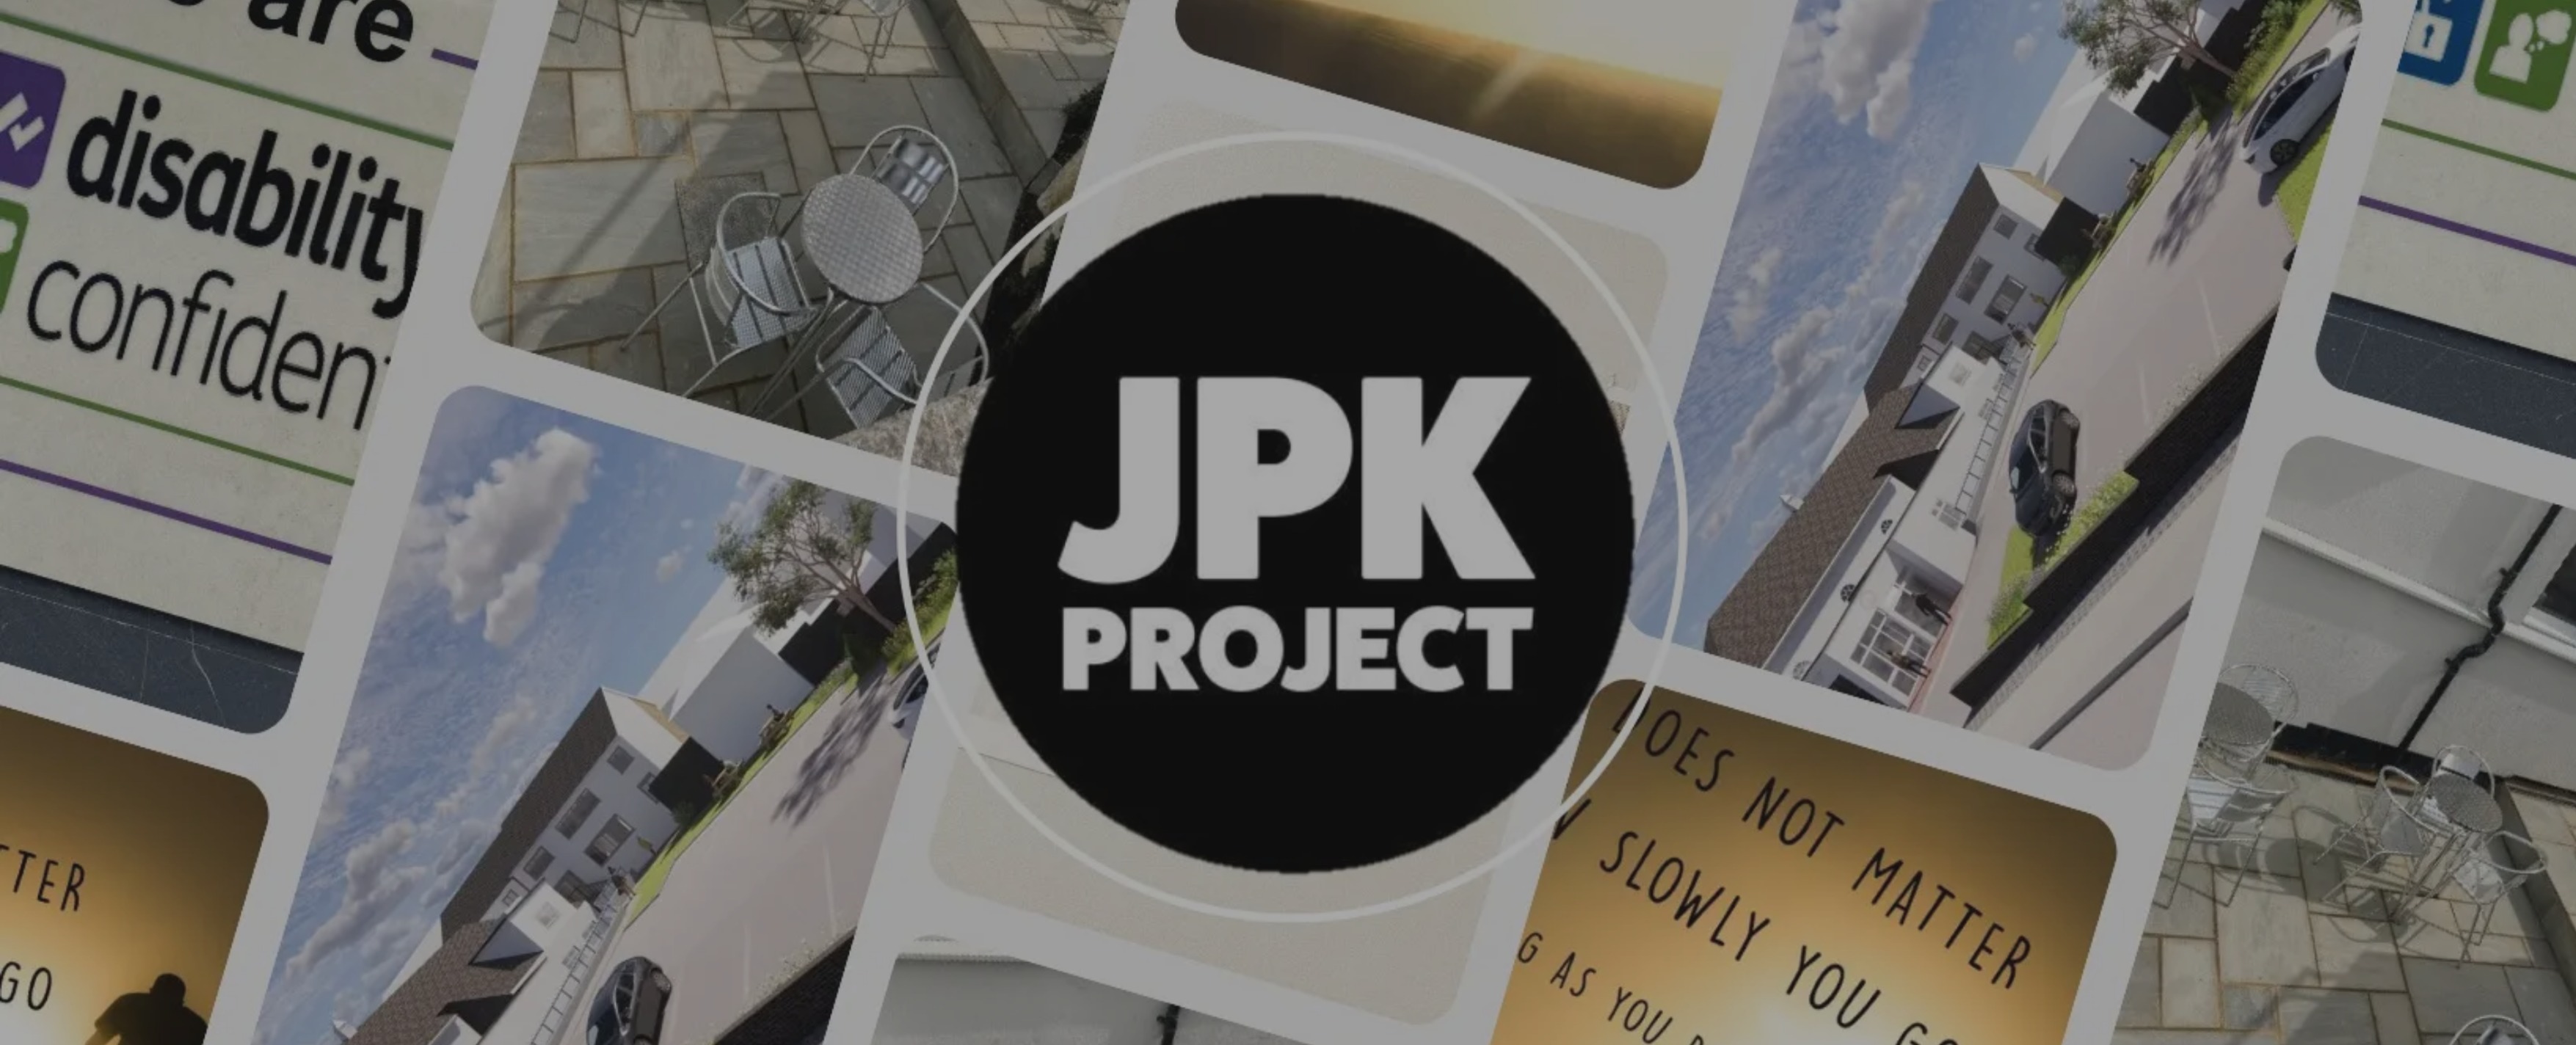 JPK Sussex Project The logo